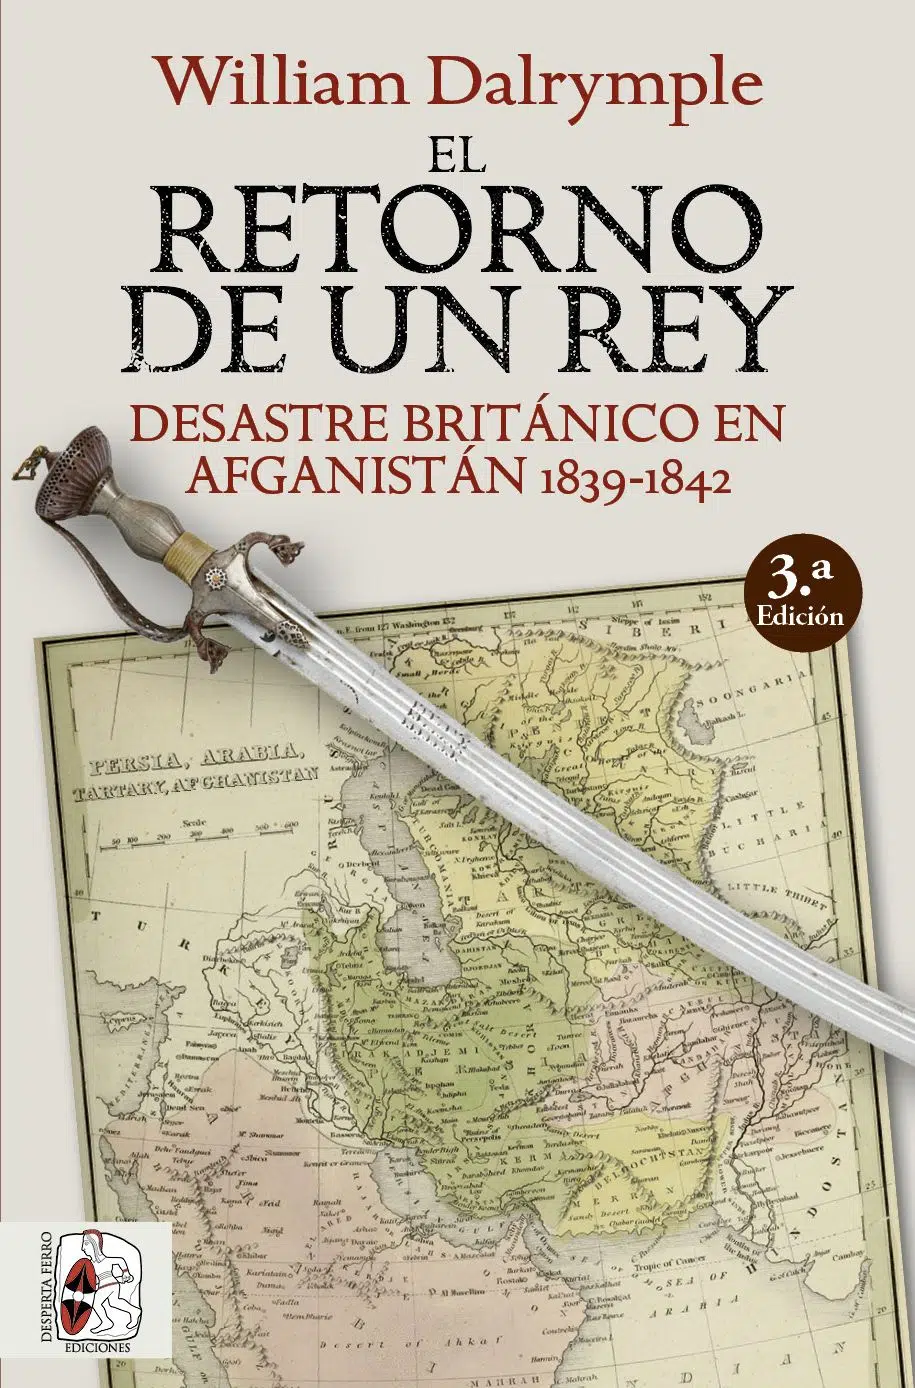 STORE - Serrano Rey